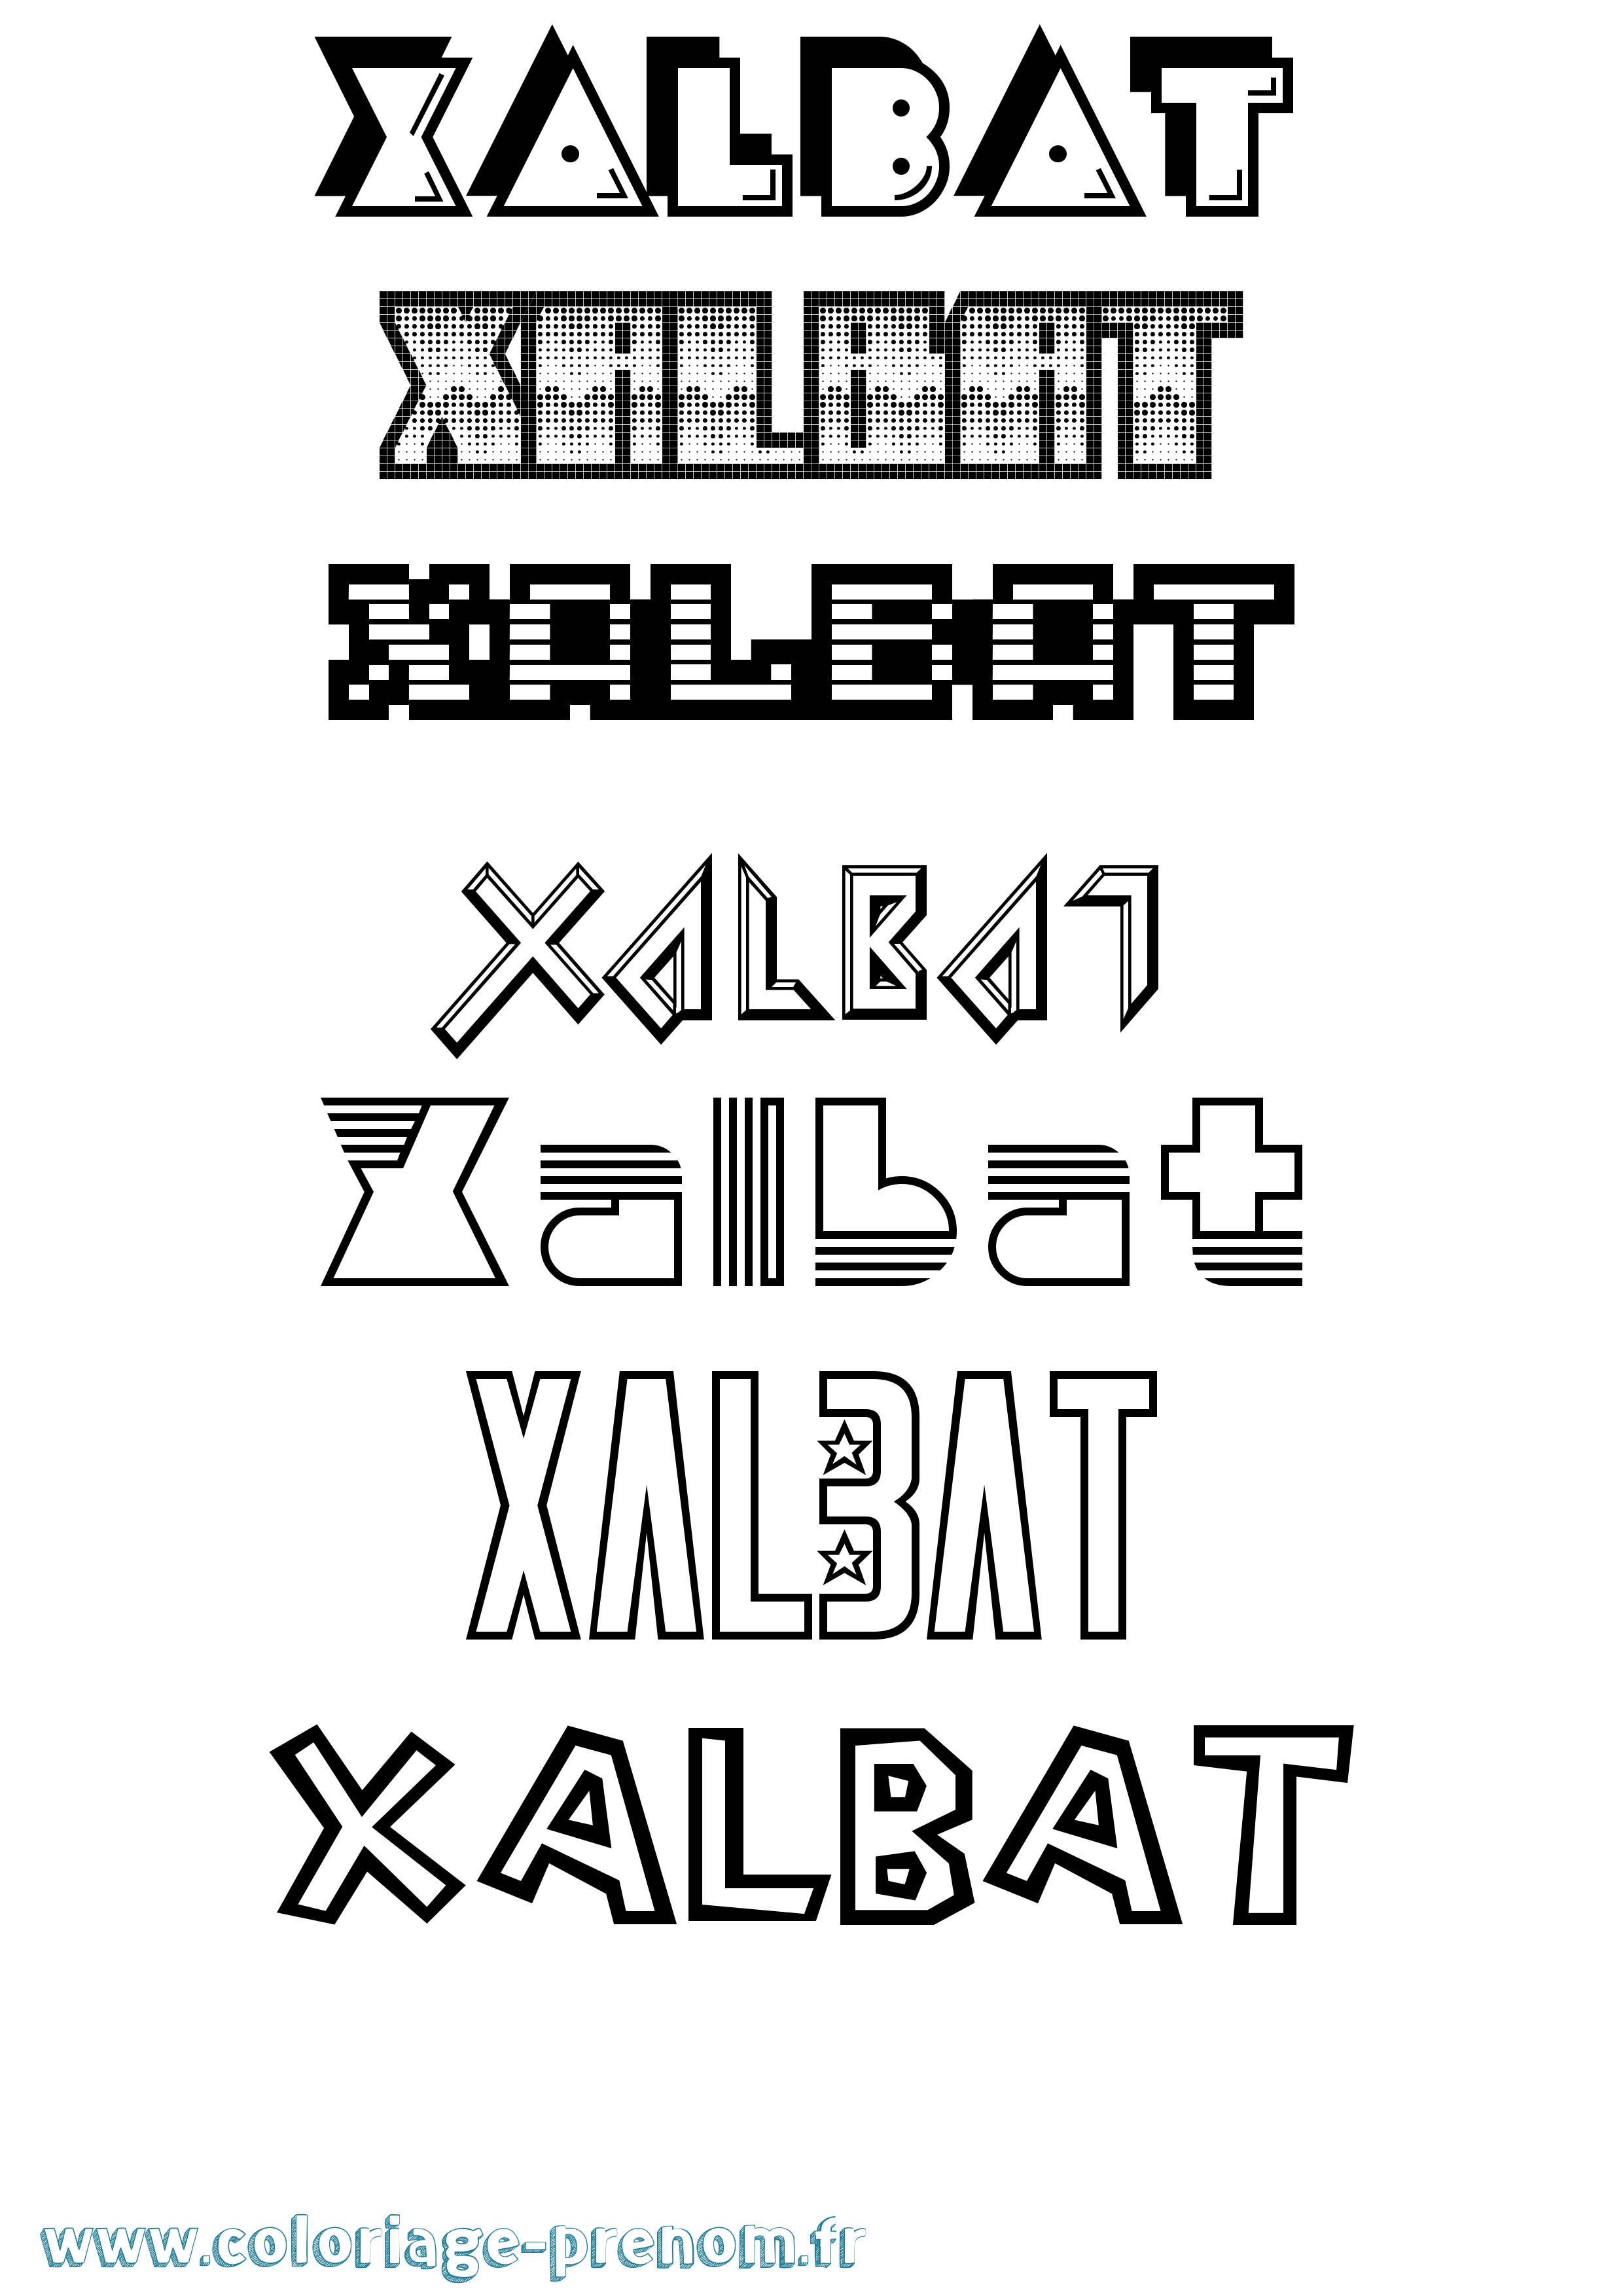 Coloriage prénom Xalbat Jeux Vidéos